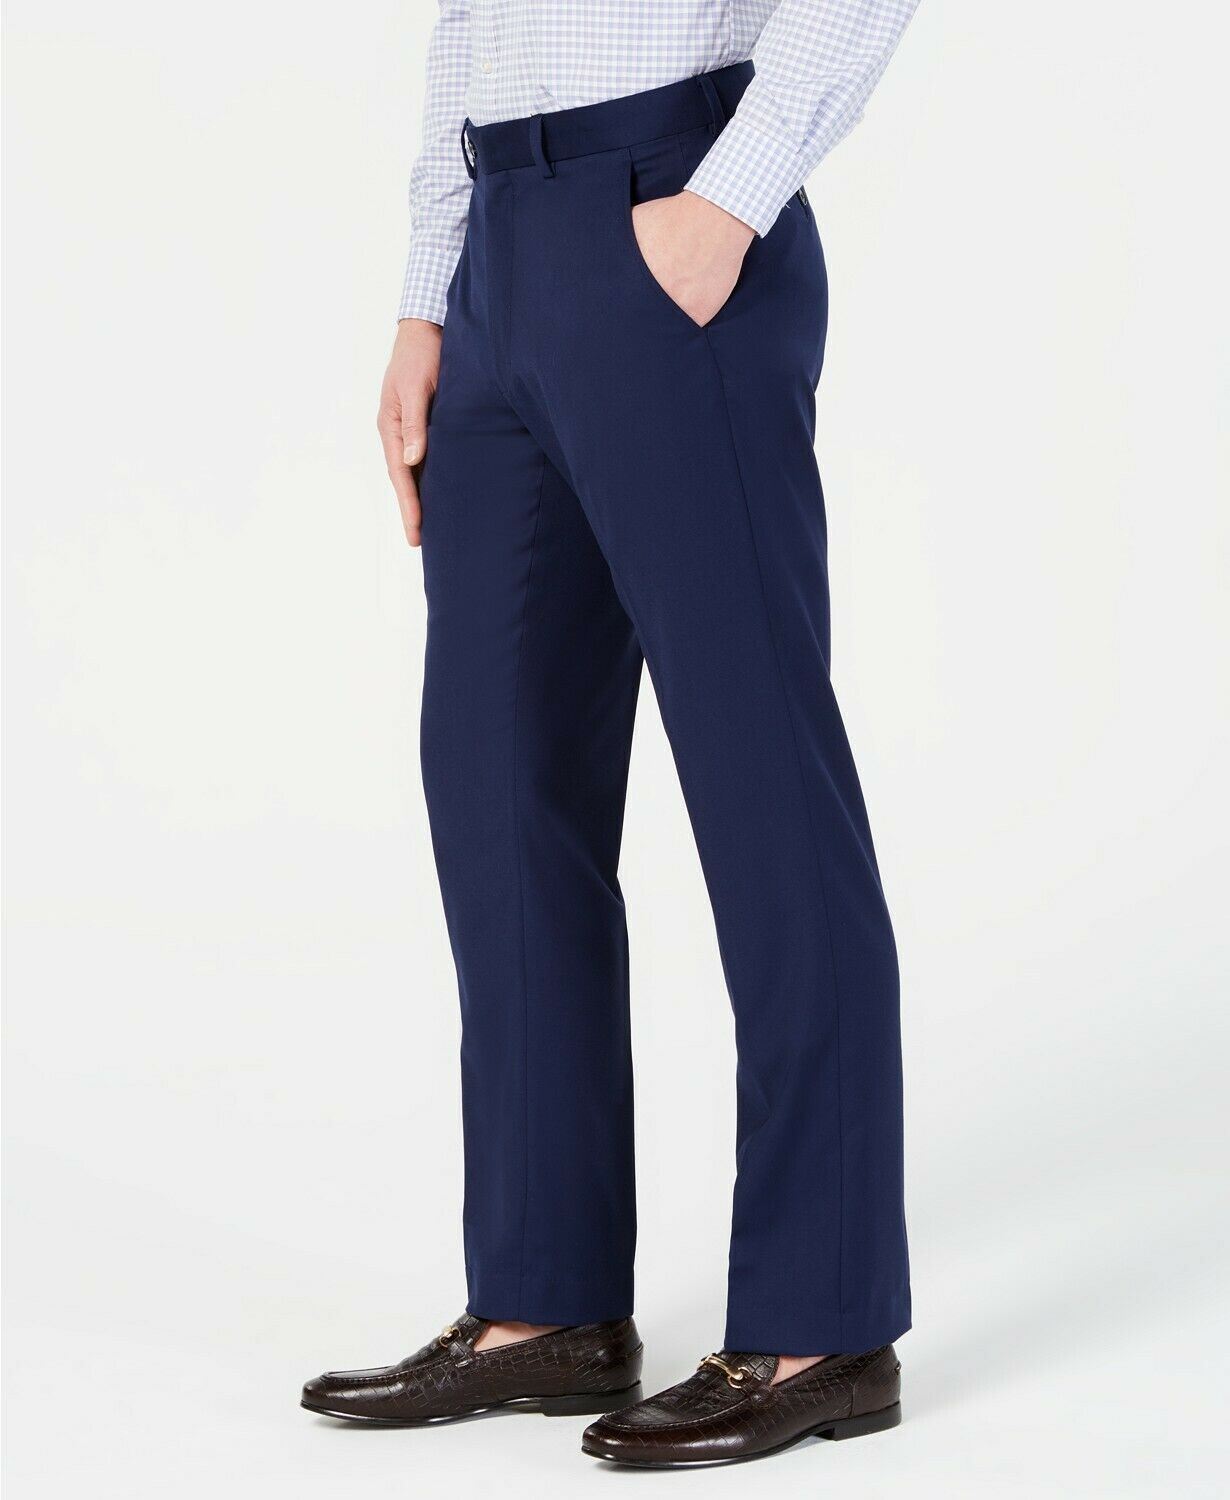 Perry Ellis Men's Portfolio Slim-Fit Stretch Navy Solid Dress Pants 36 x 32